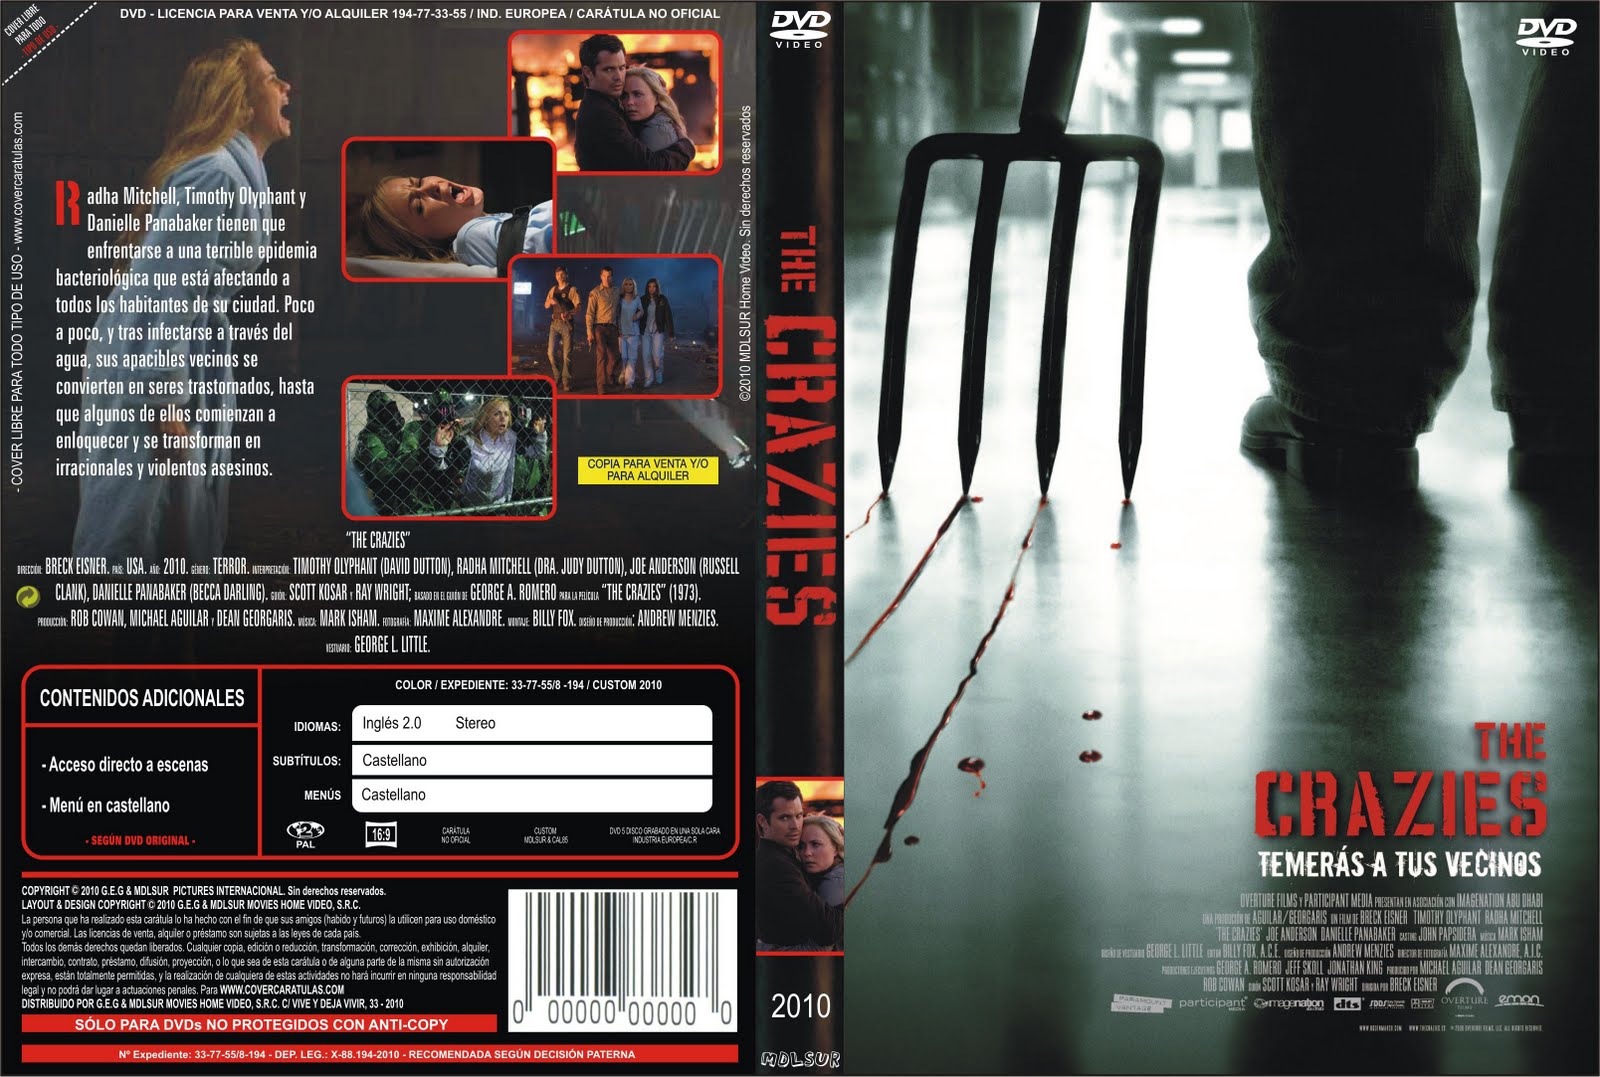 Stiahni si HD Filmy Podivni / The Crazies (2010)(CZ/EN)[1080pHD] = CSFD 66%